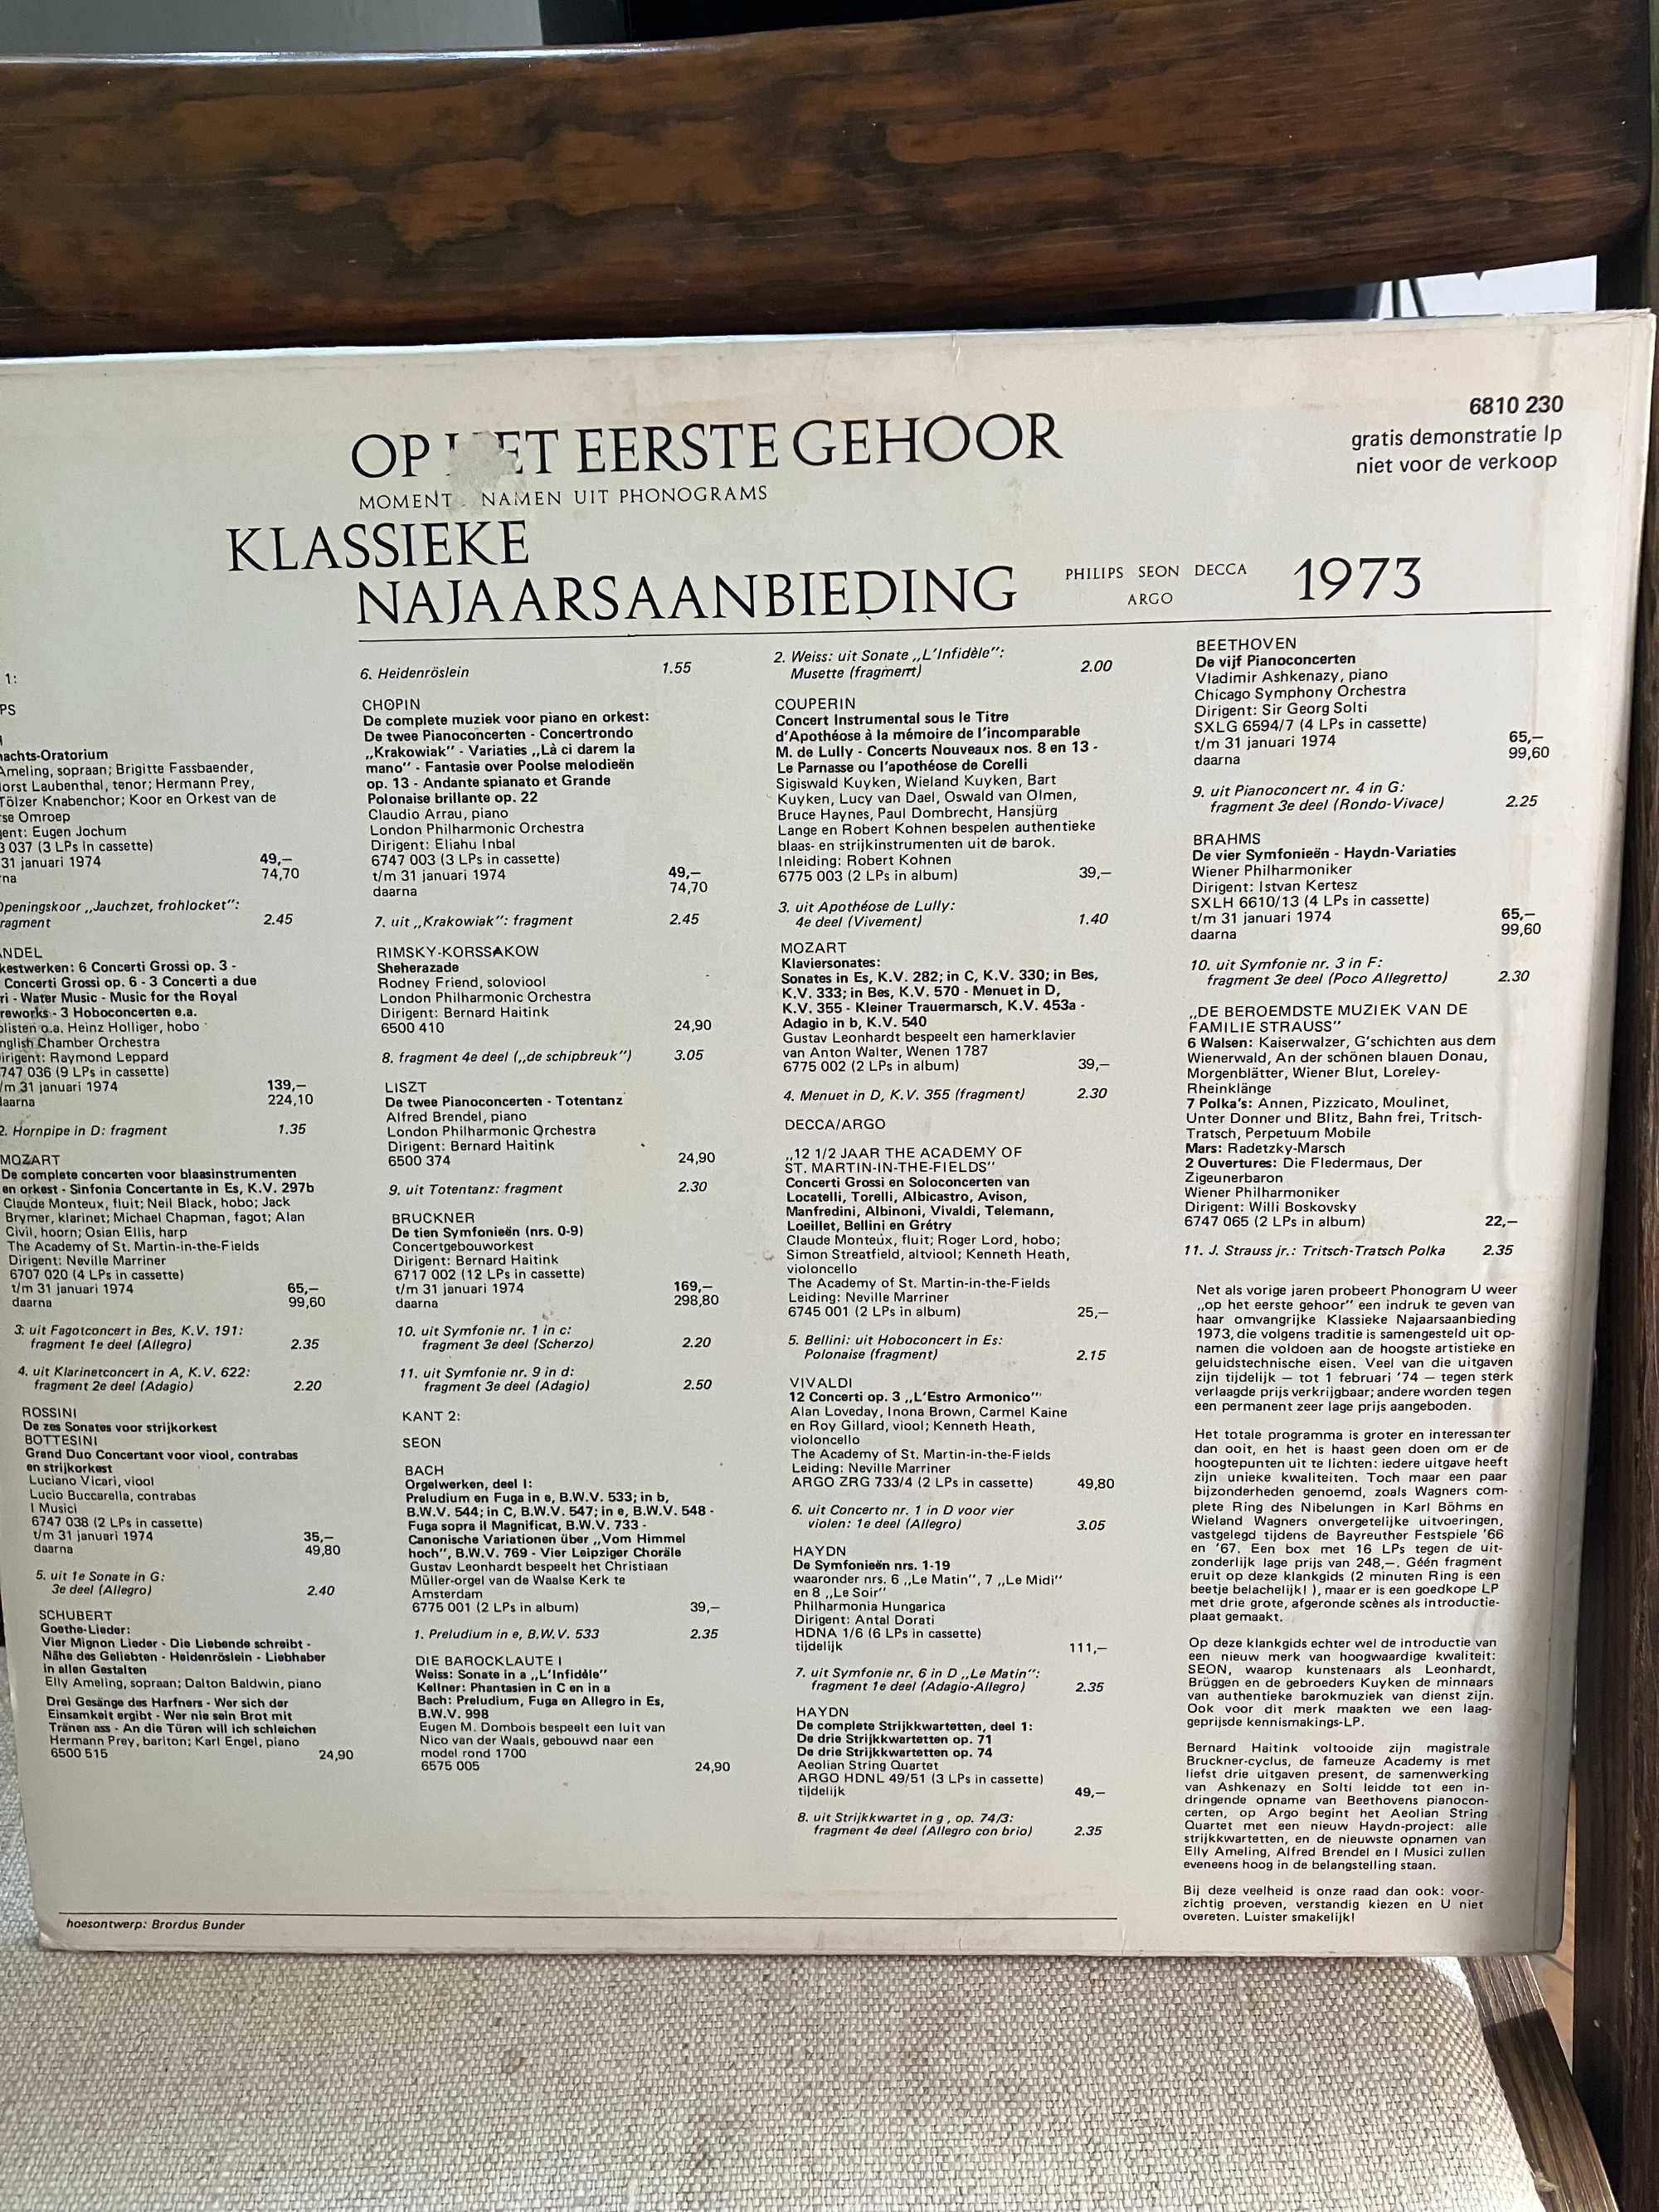 Winyl Op Het Eerste Gehoor " Klassieke najaars-Aanbieding 1973 " mint